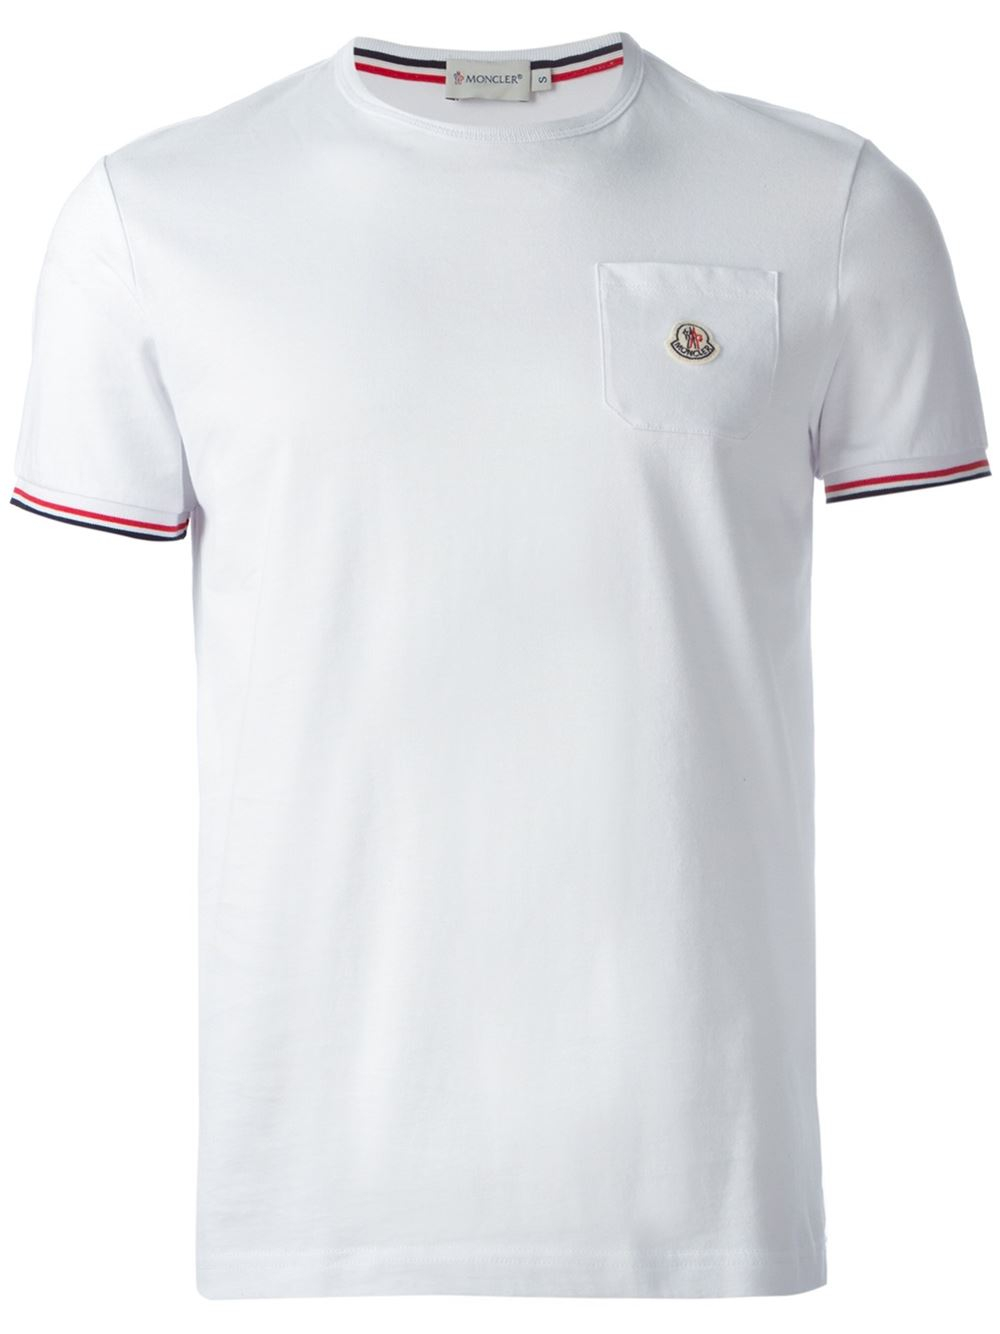 Lyst - Moncler Crew-Neck T-Shirt in White for Men